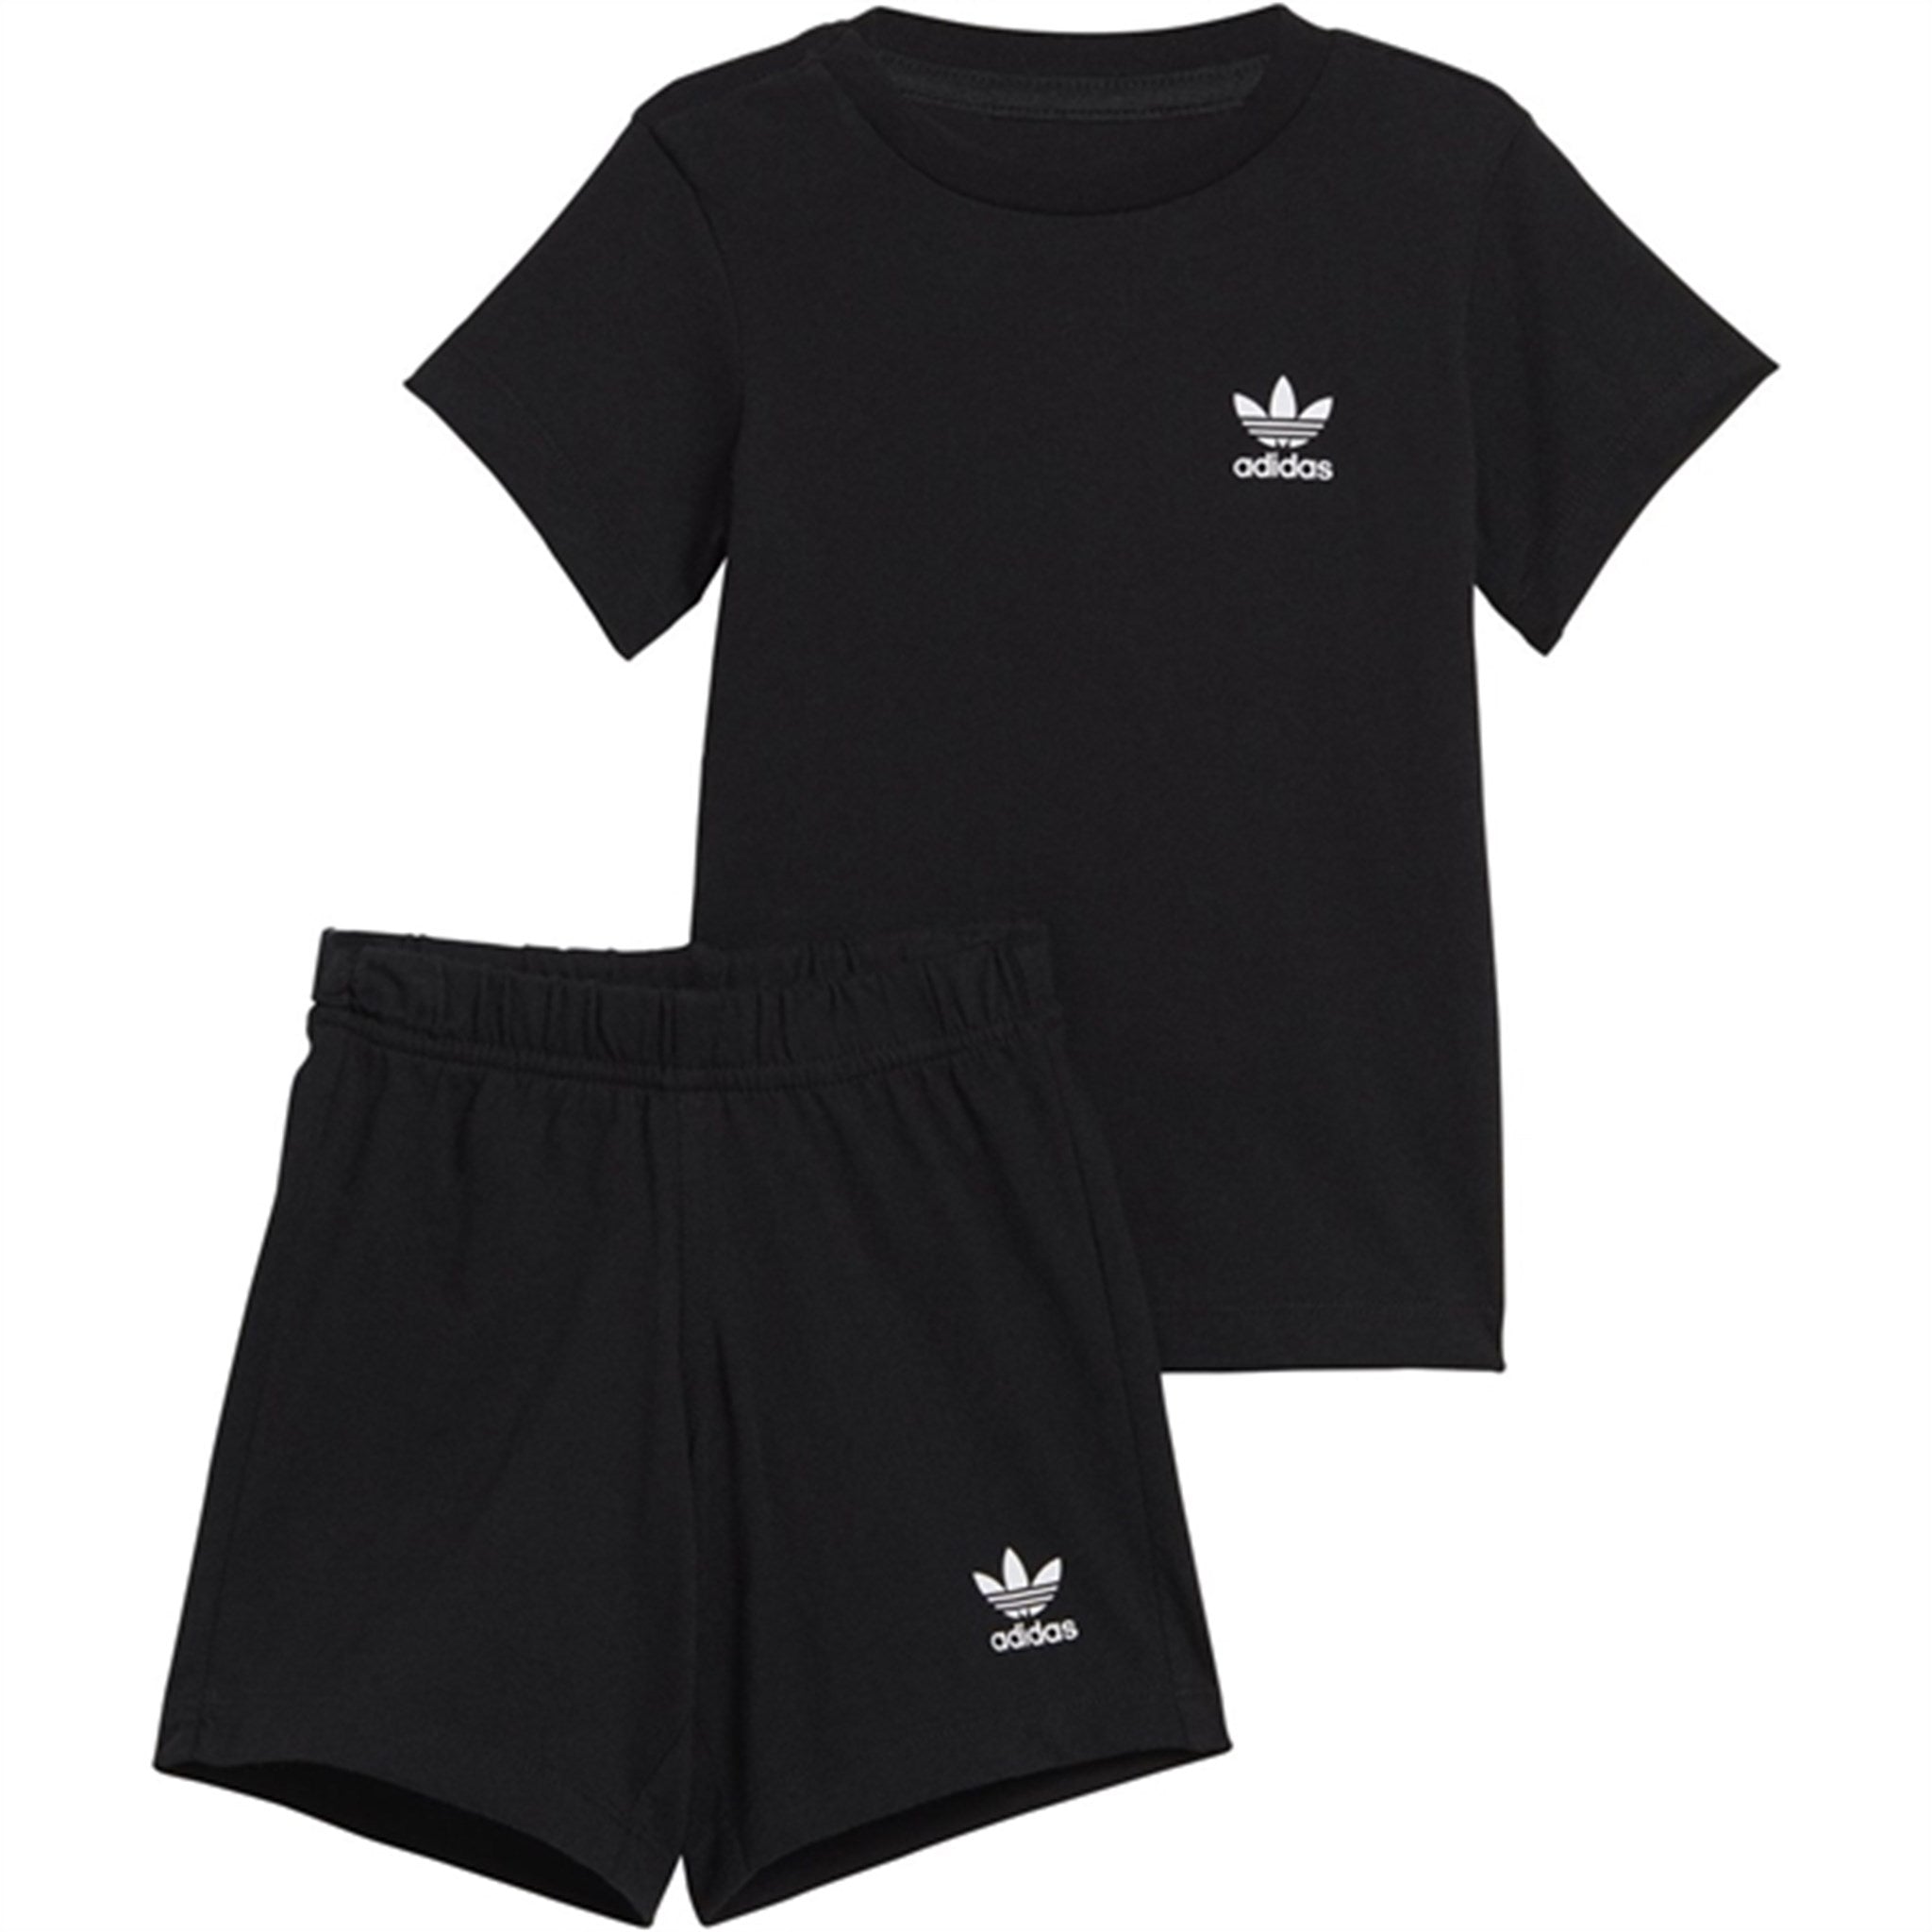 adidas Originals Black Shorts Tee Set